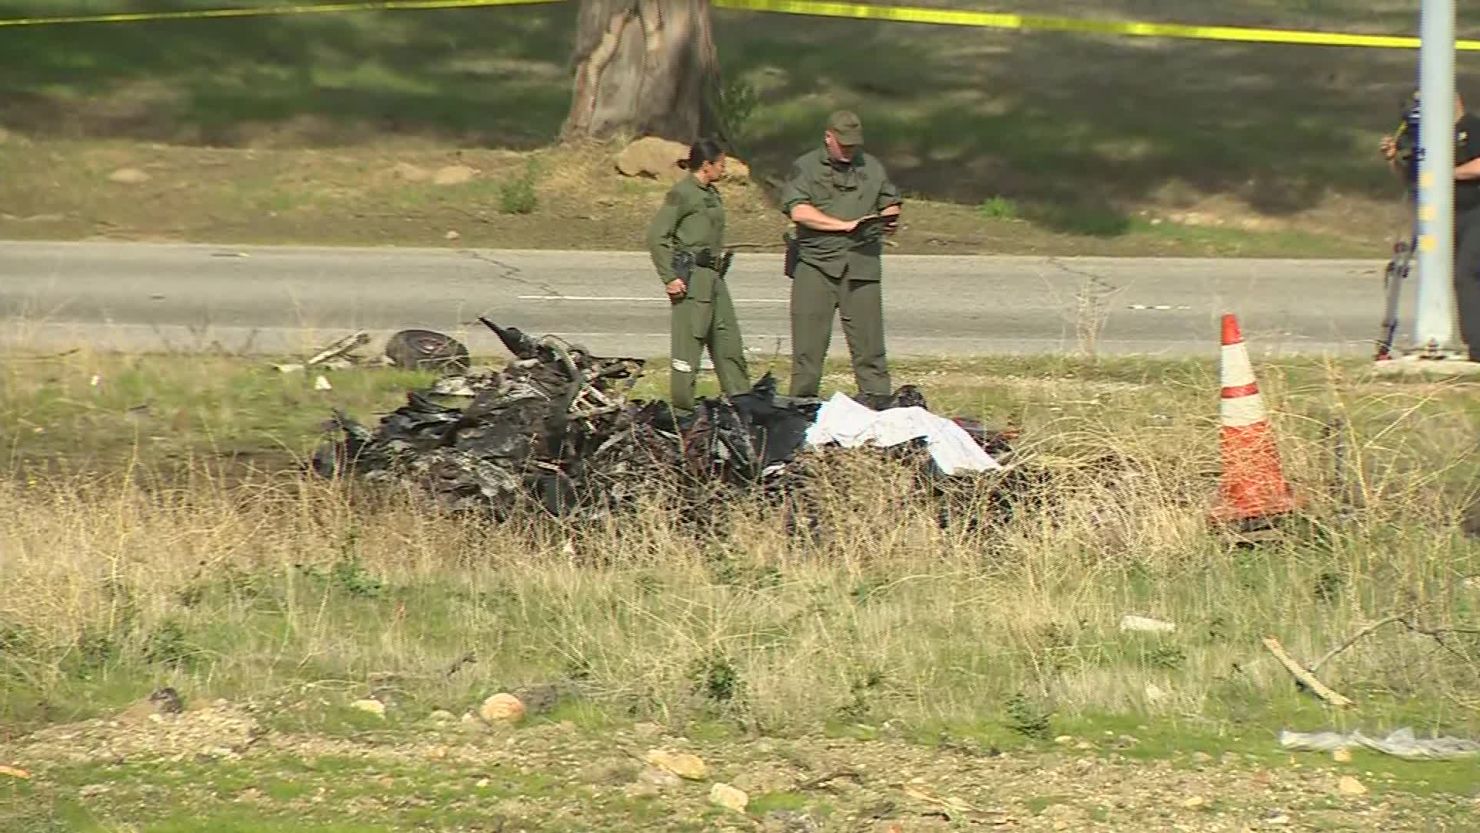 A small plane crashed and burned Saturday in Santa Clarita, California, authorities said.